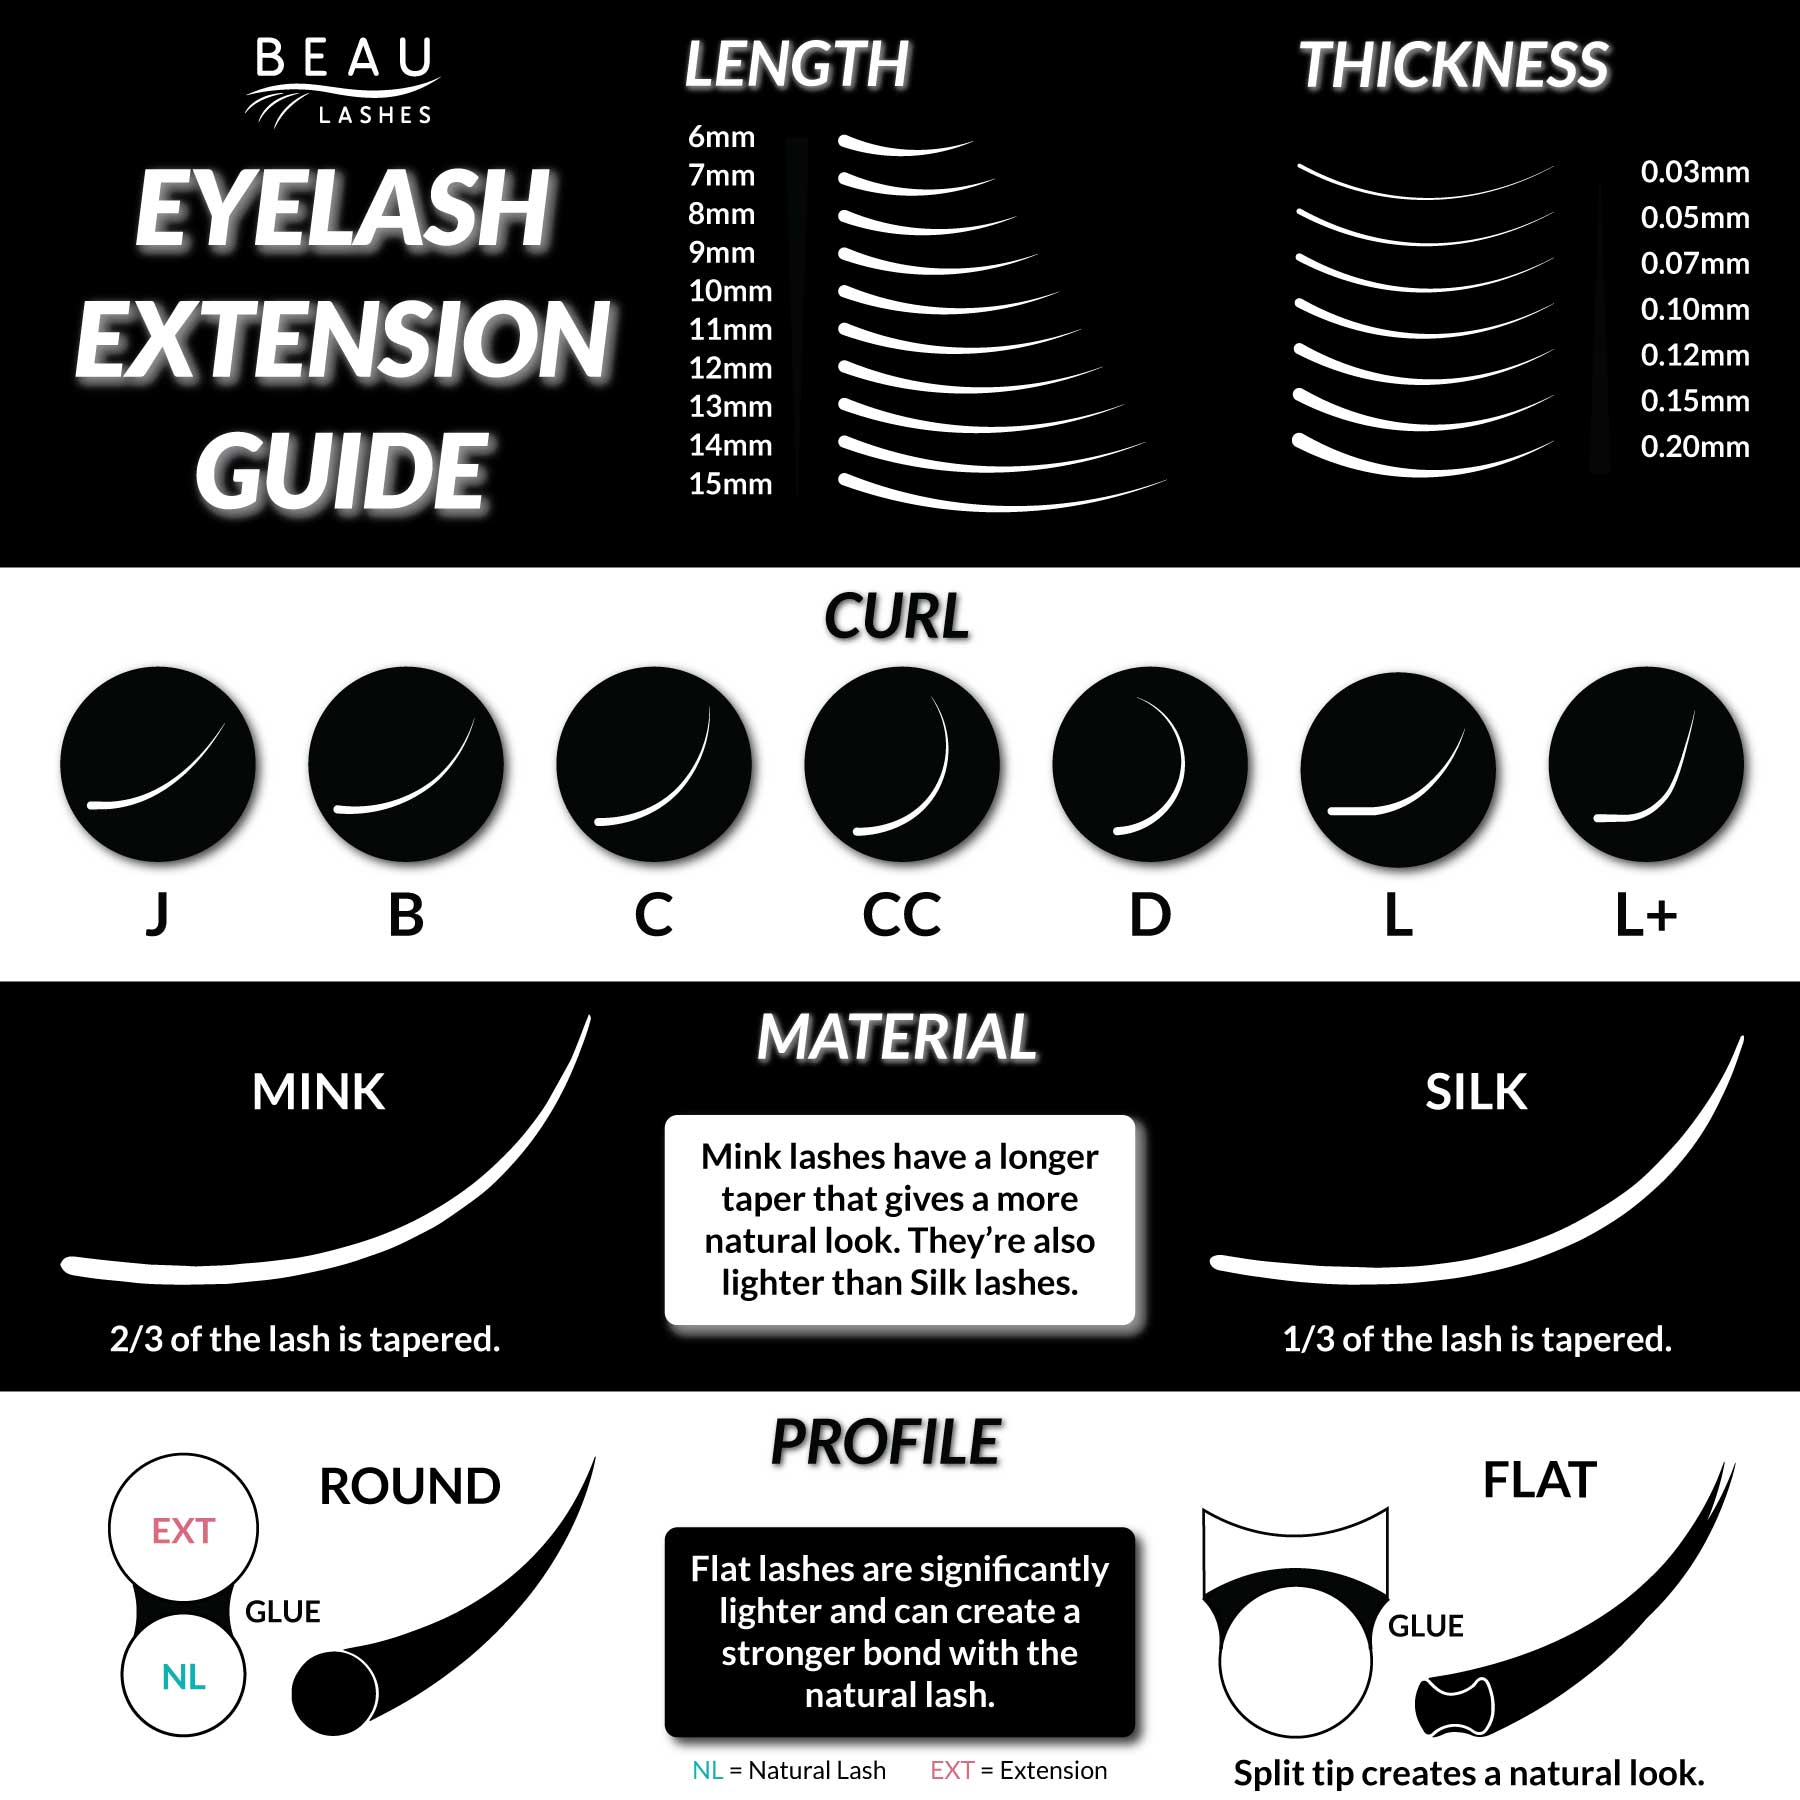 Beau Lashes Eyelash Extension Guide